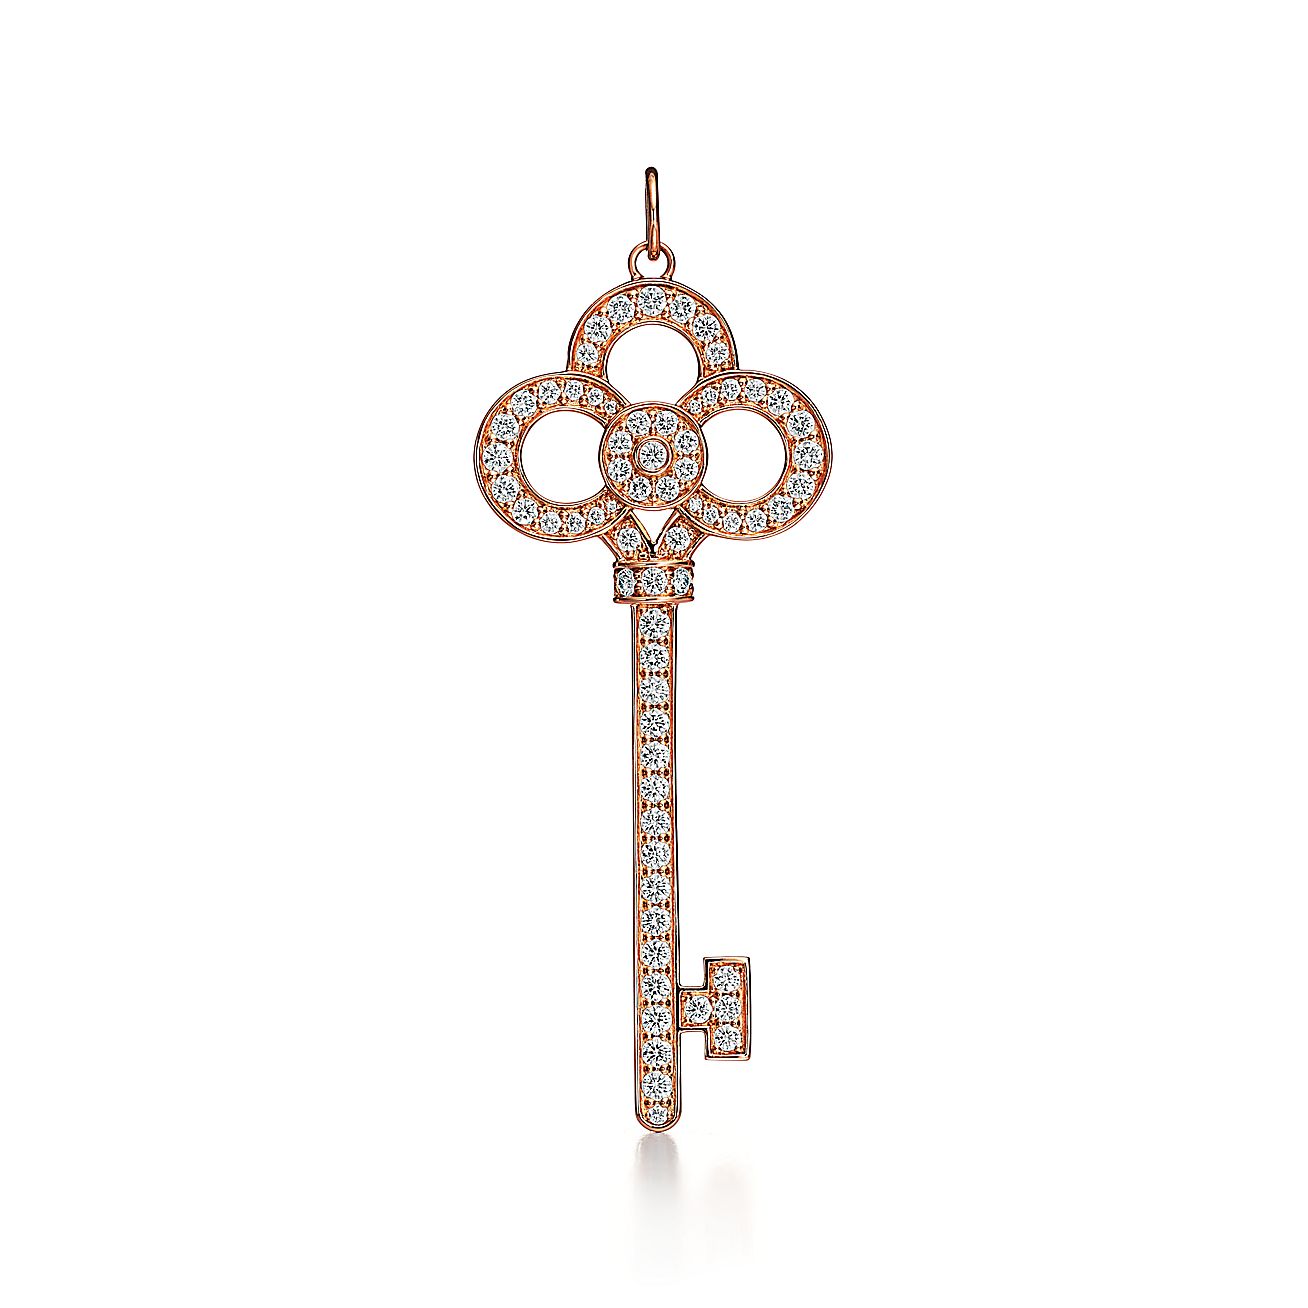 Tiffany & Co. 18K Rose Gold Key Necklace, Tiffany & Co.